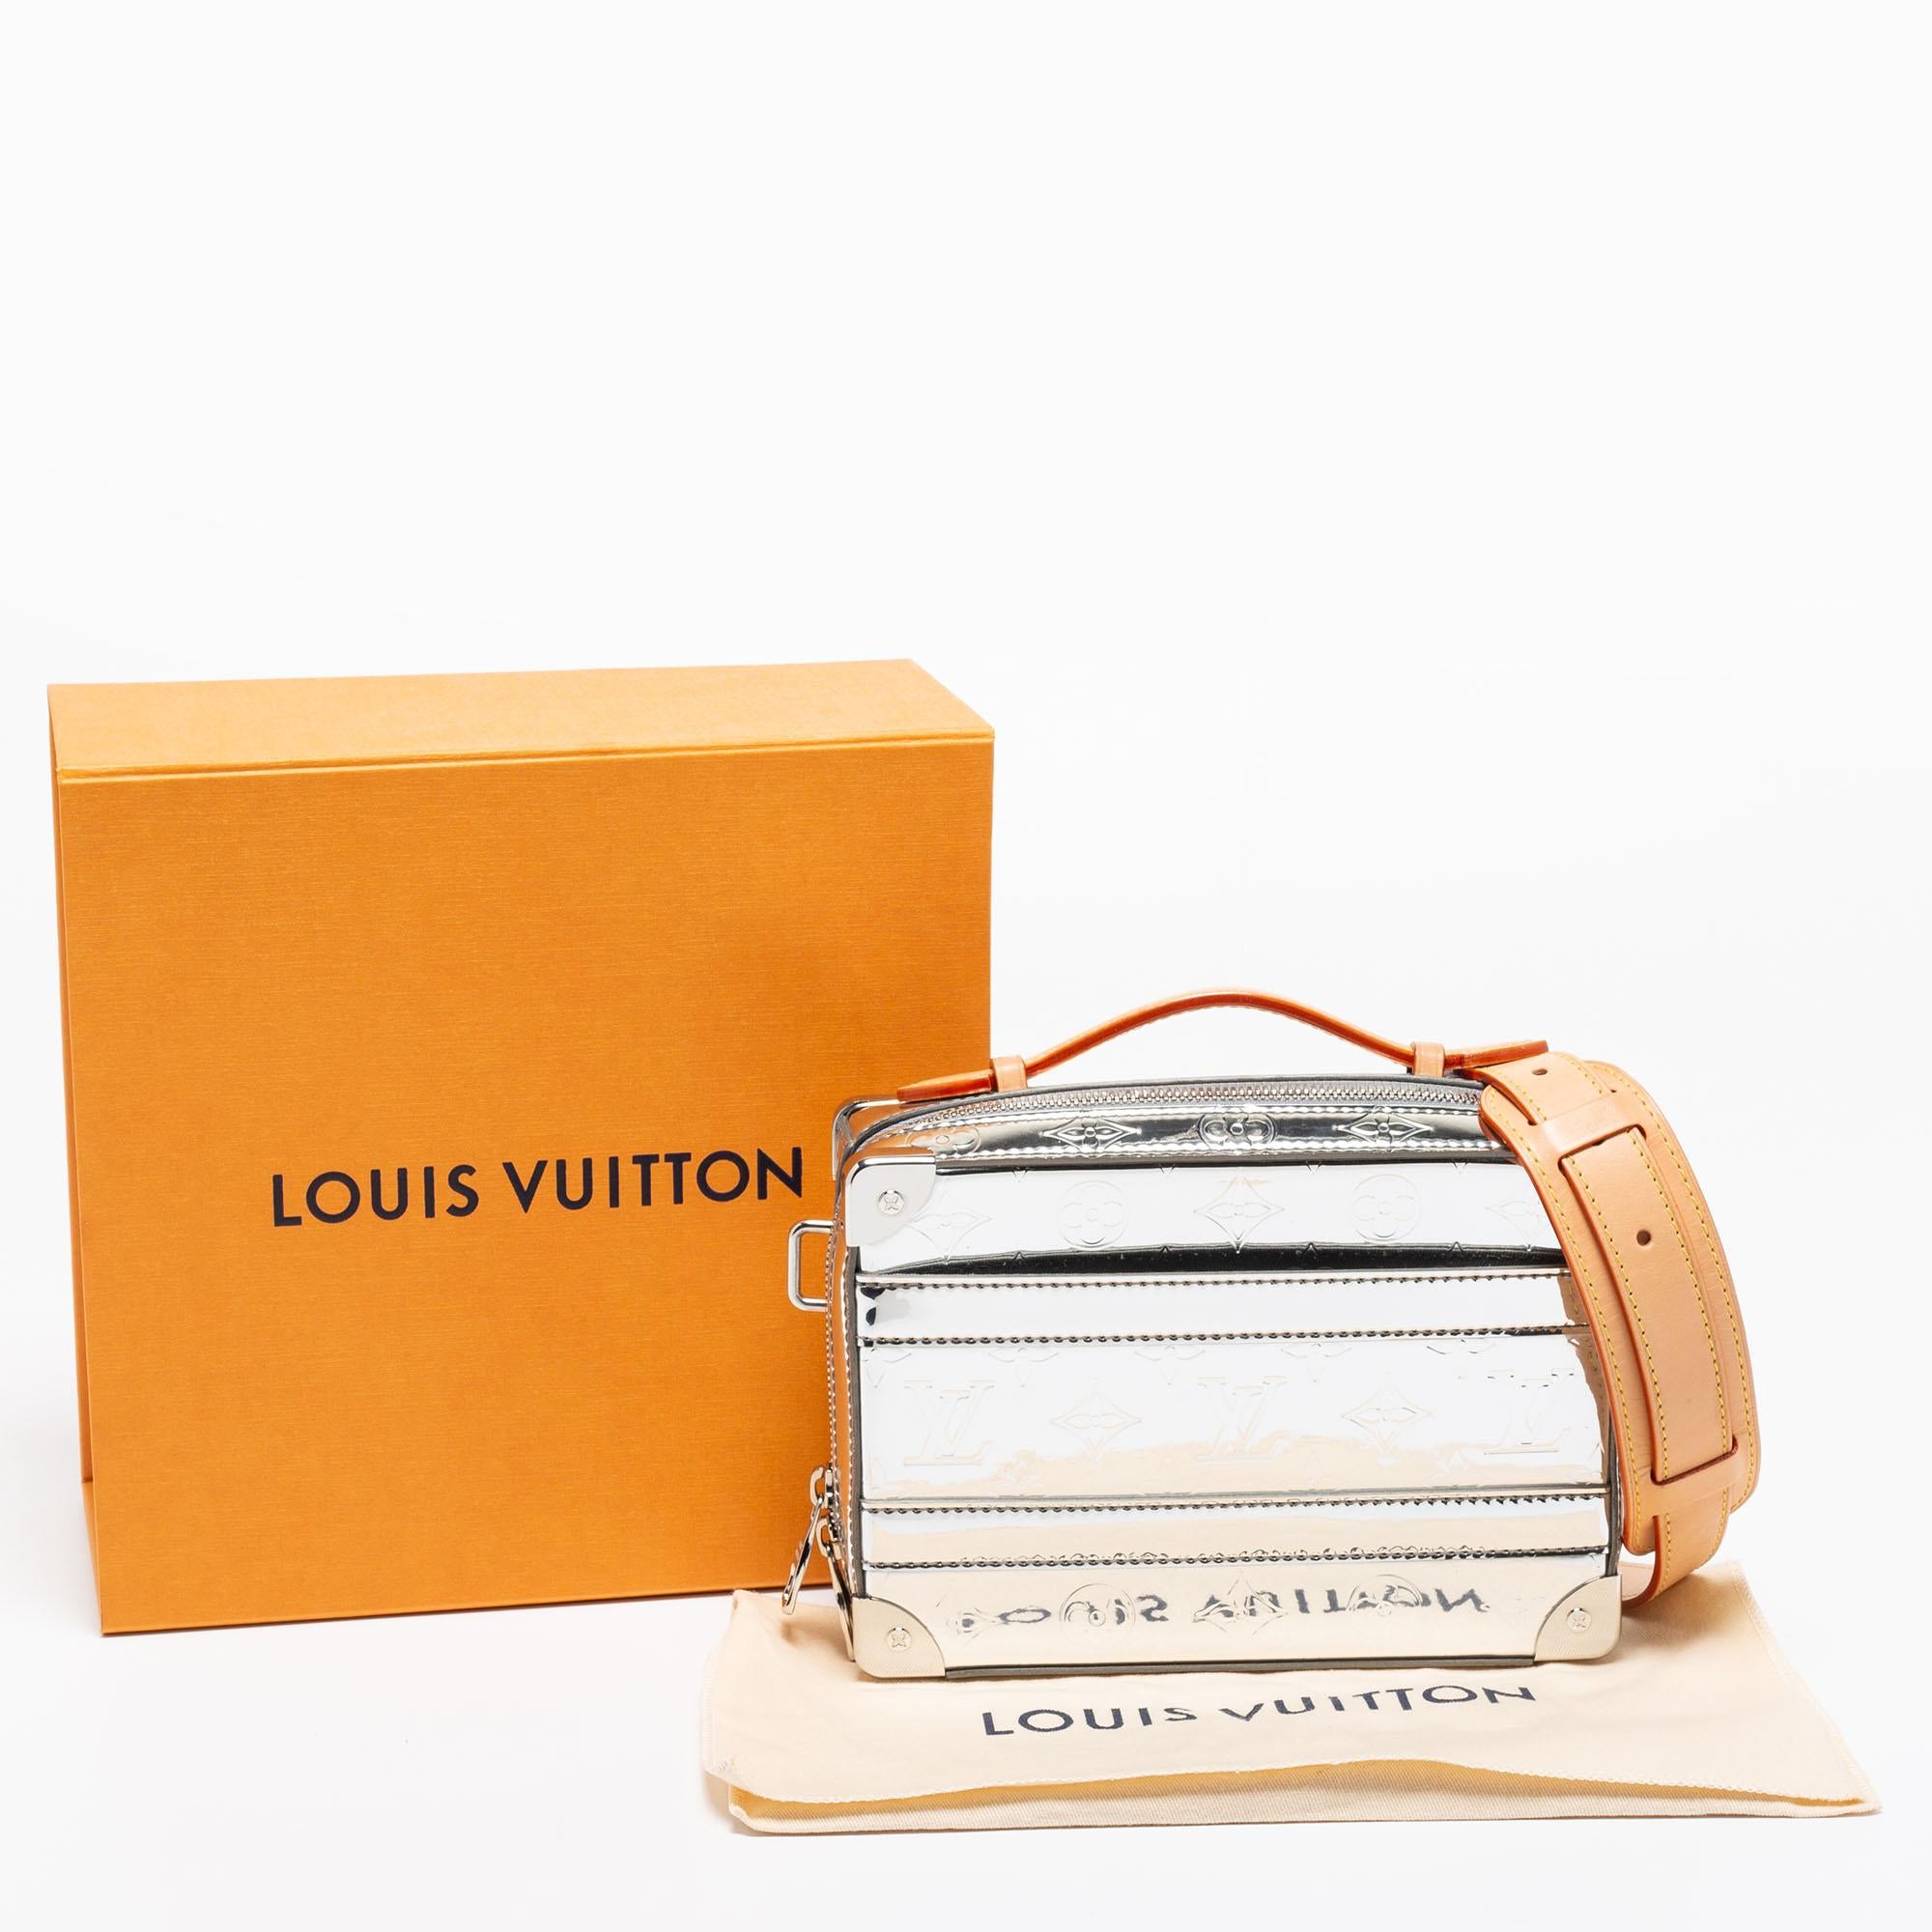 Louis Vuitton Silver Mirrored Monogram Handle Trunk 8